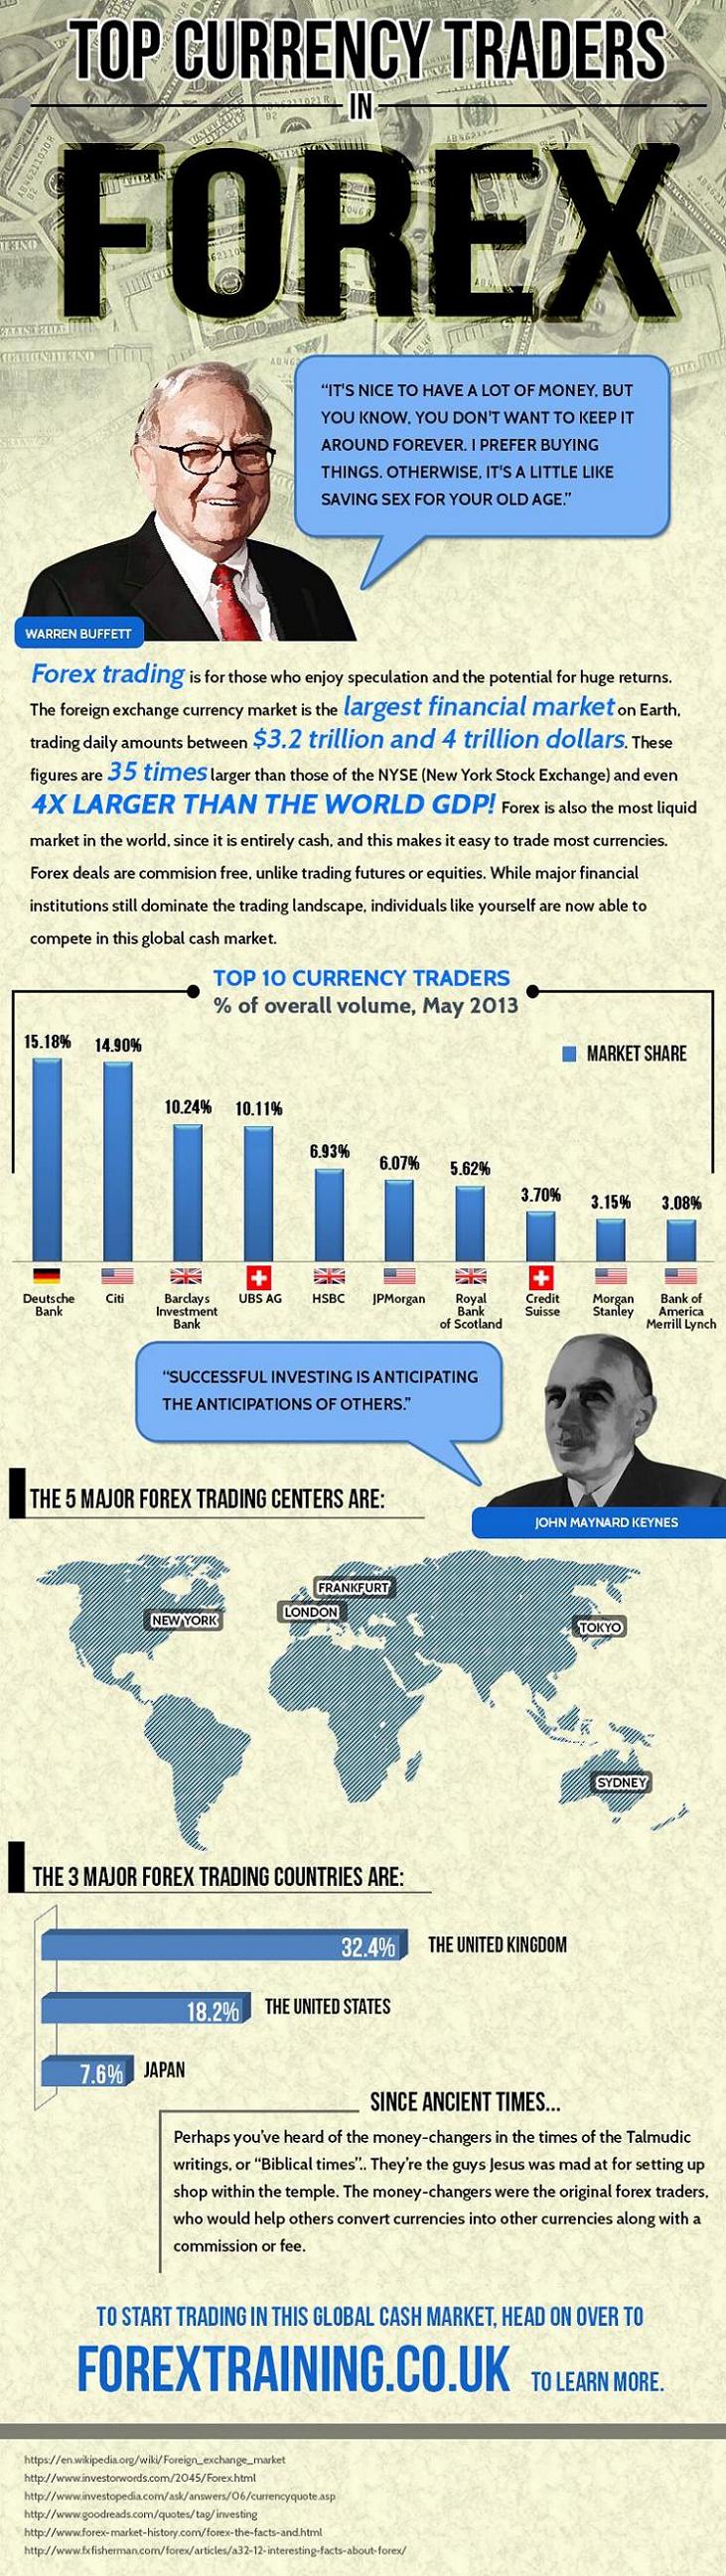 Forex trading around the world